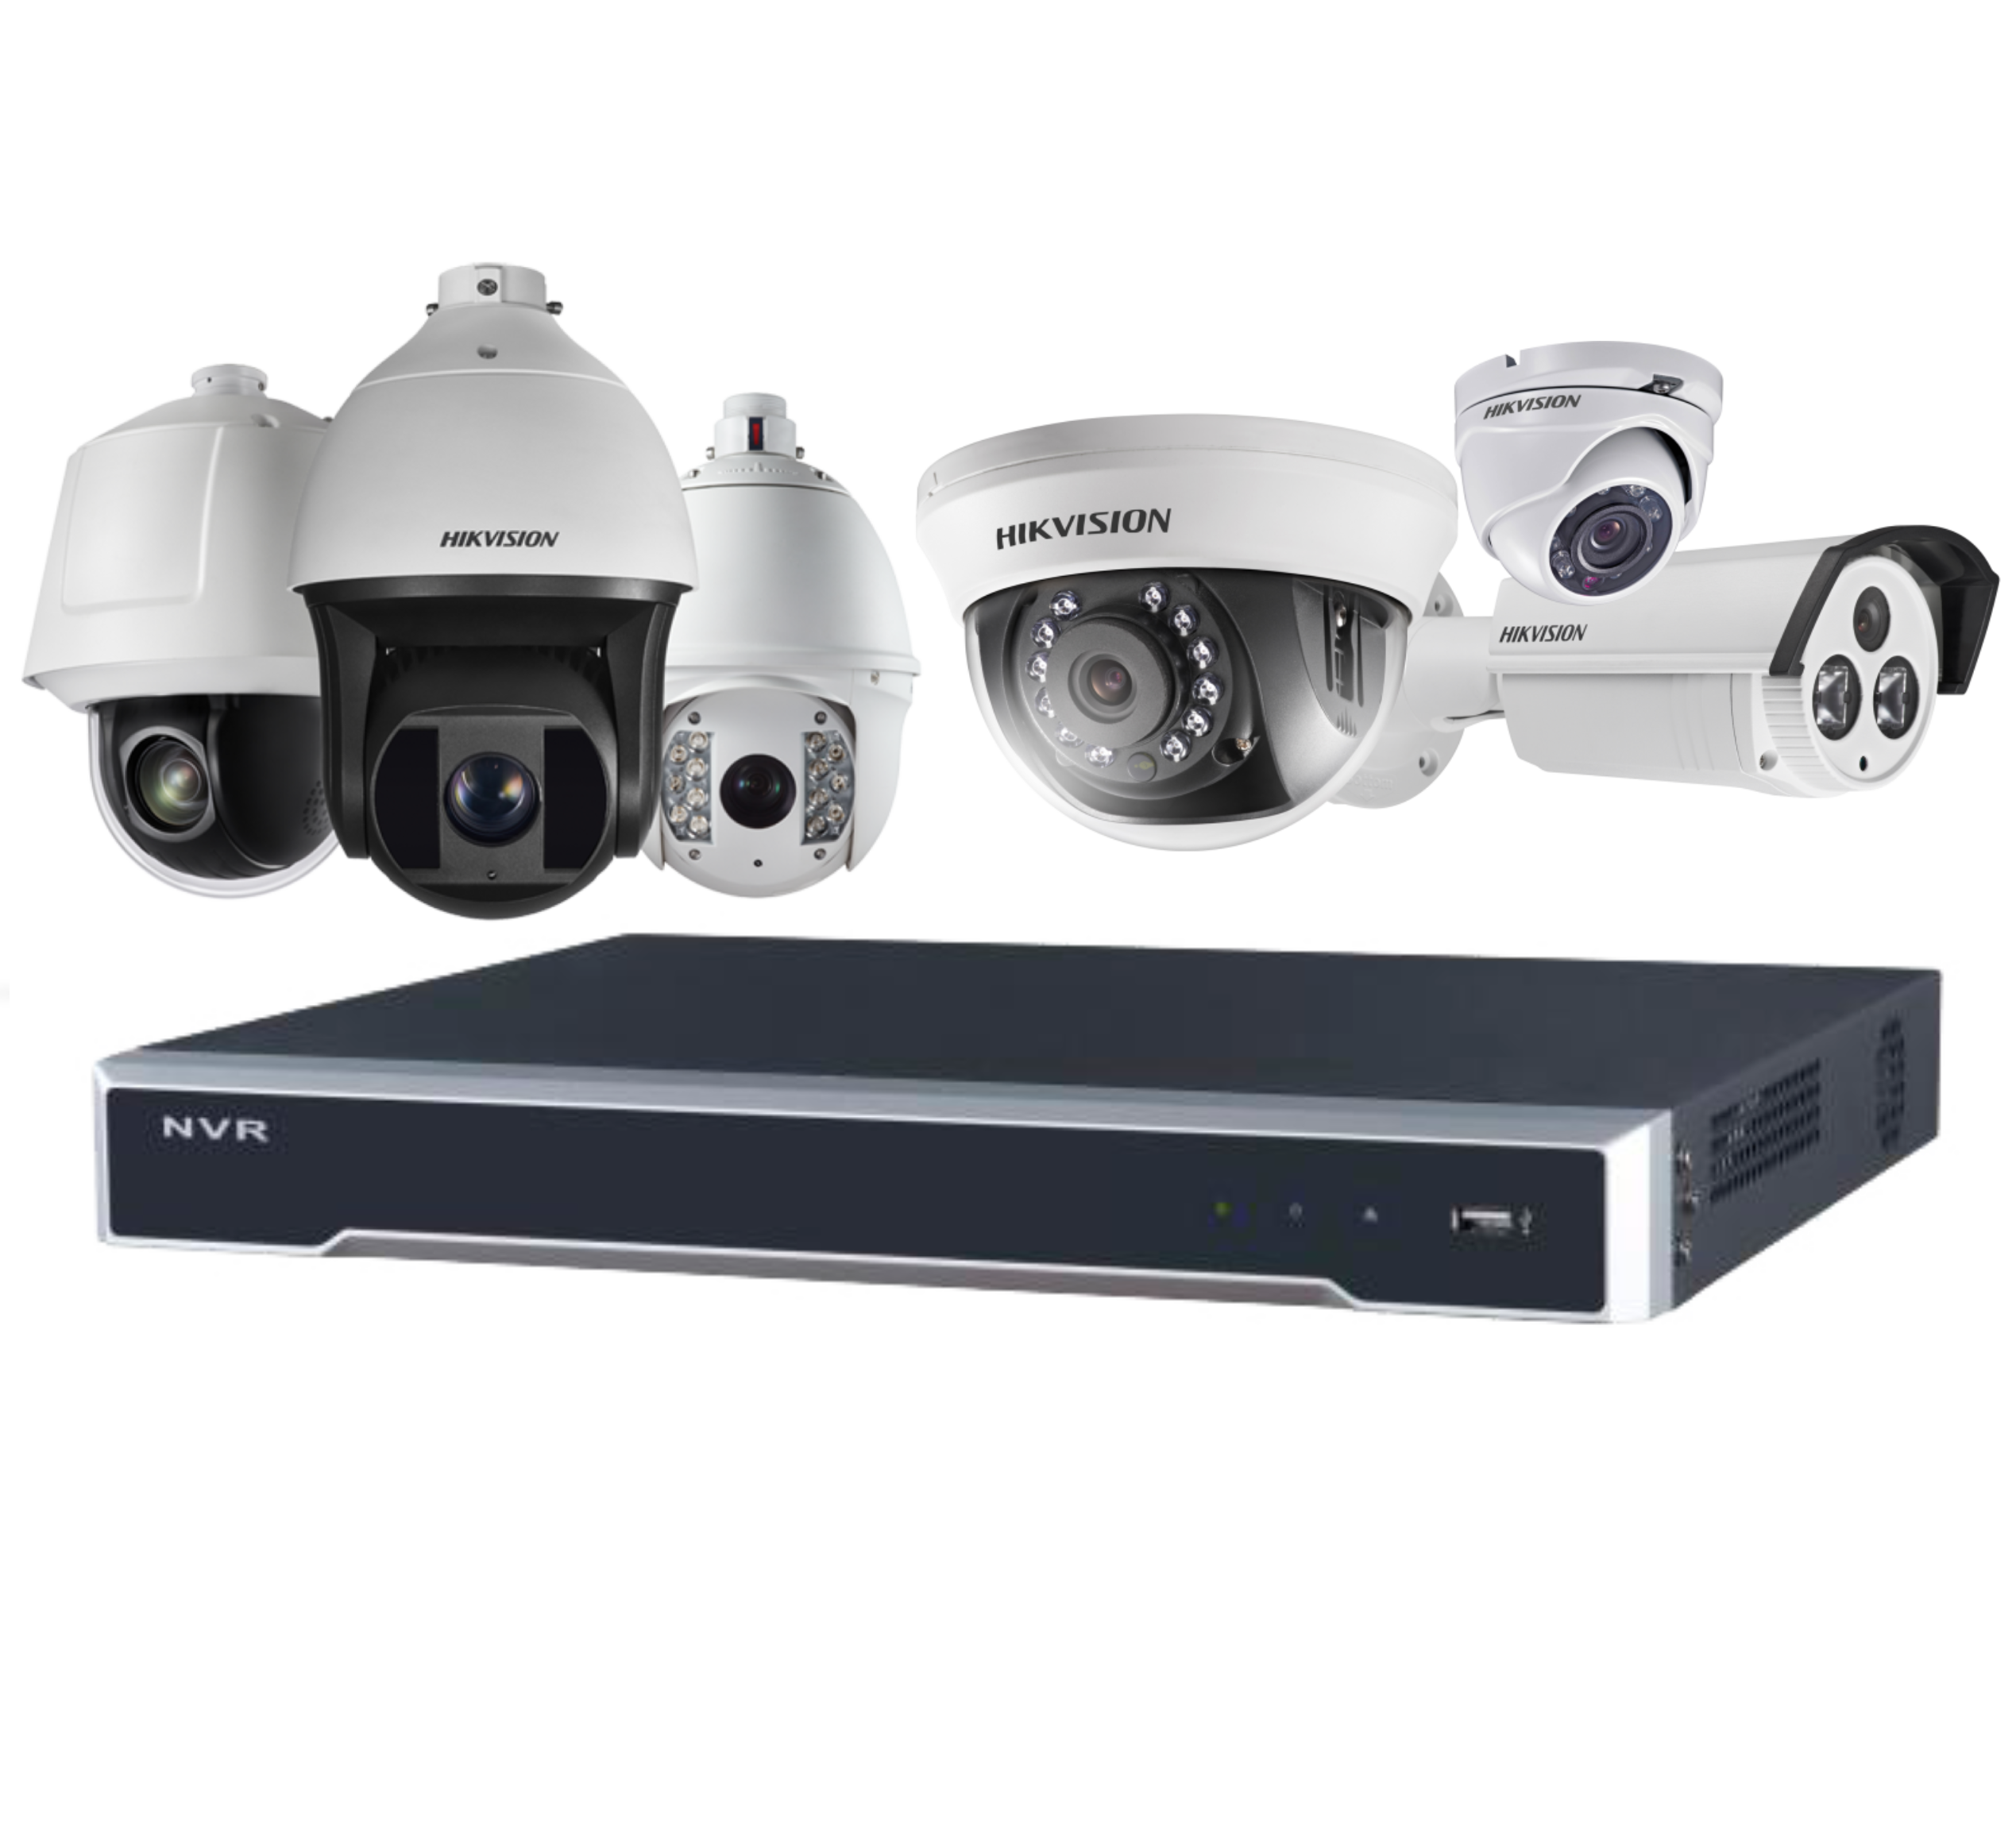 CCTV Cameras and Digital Security